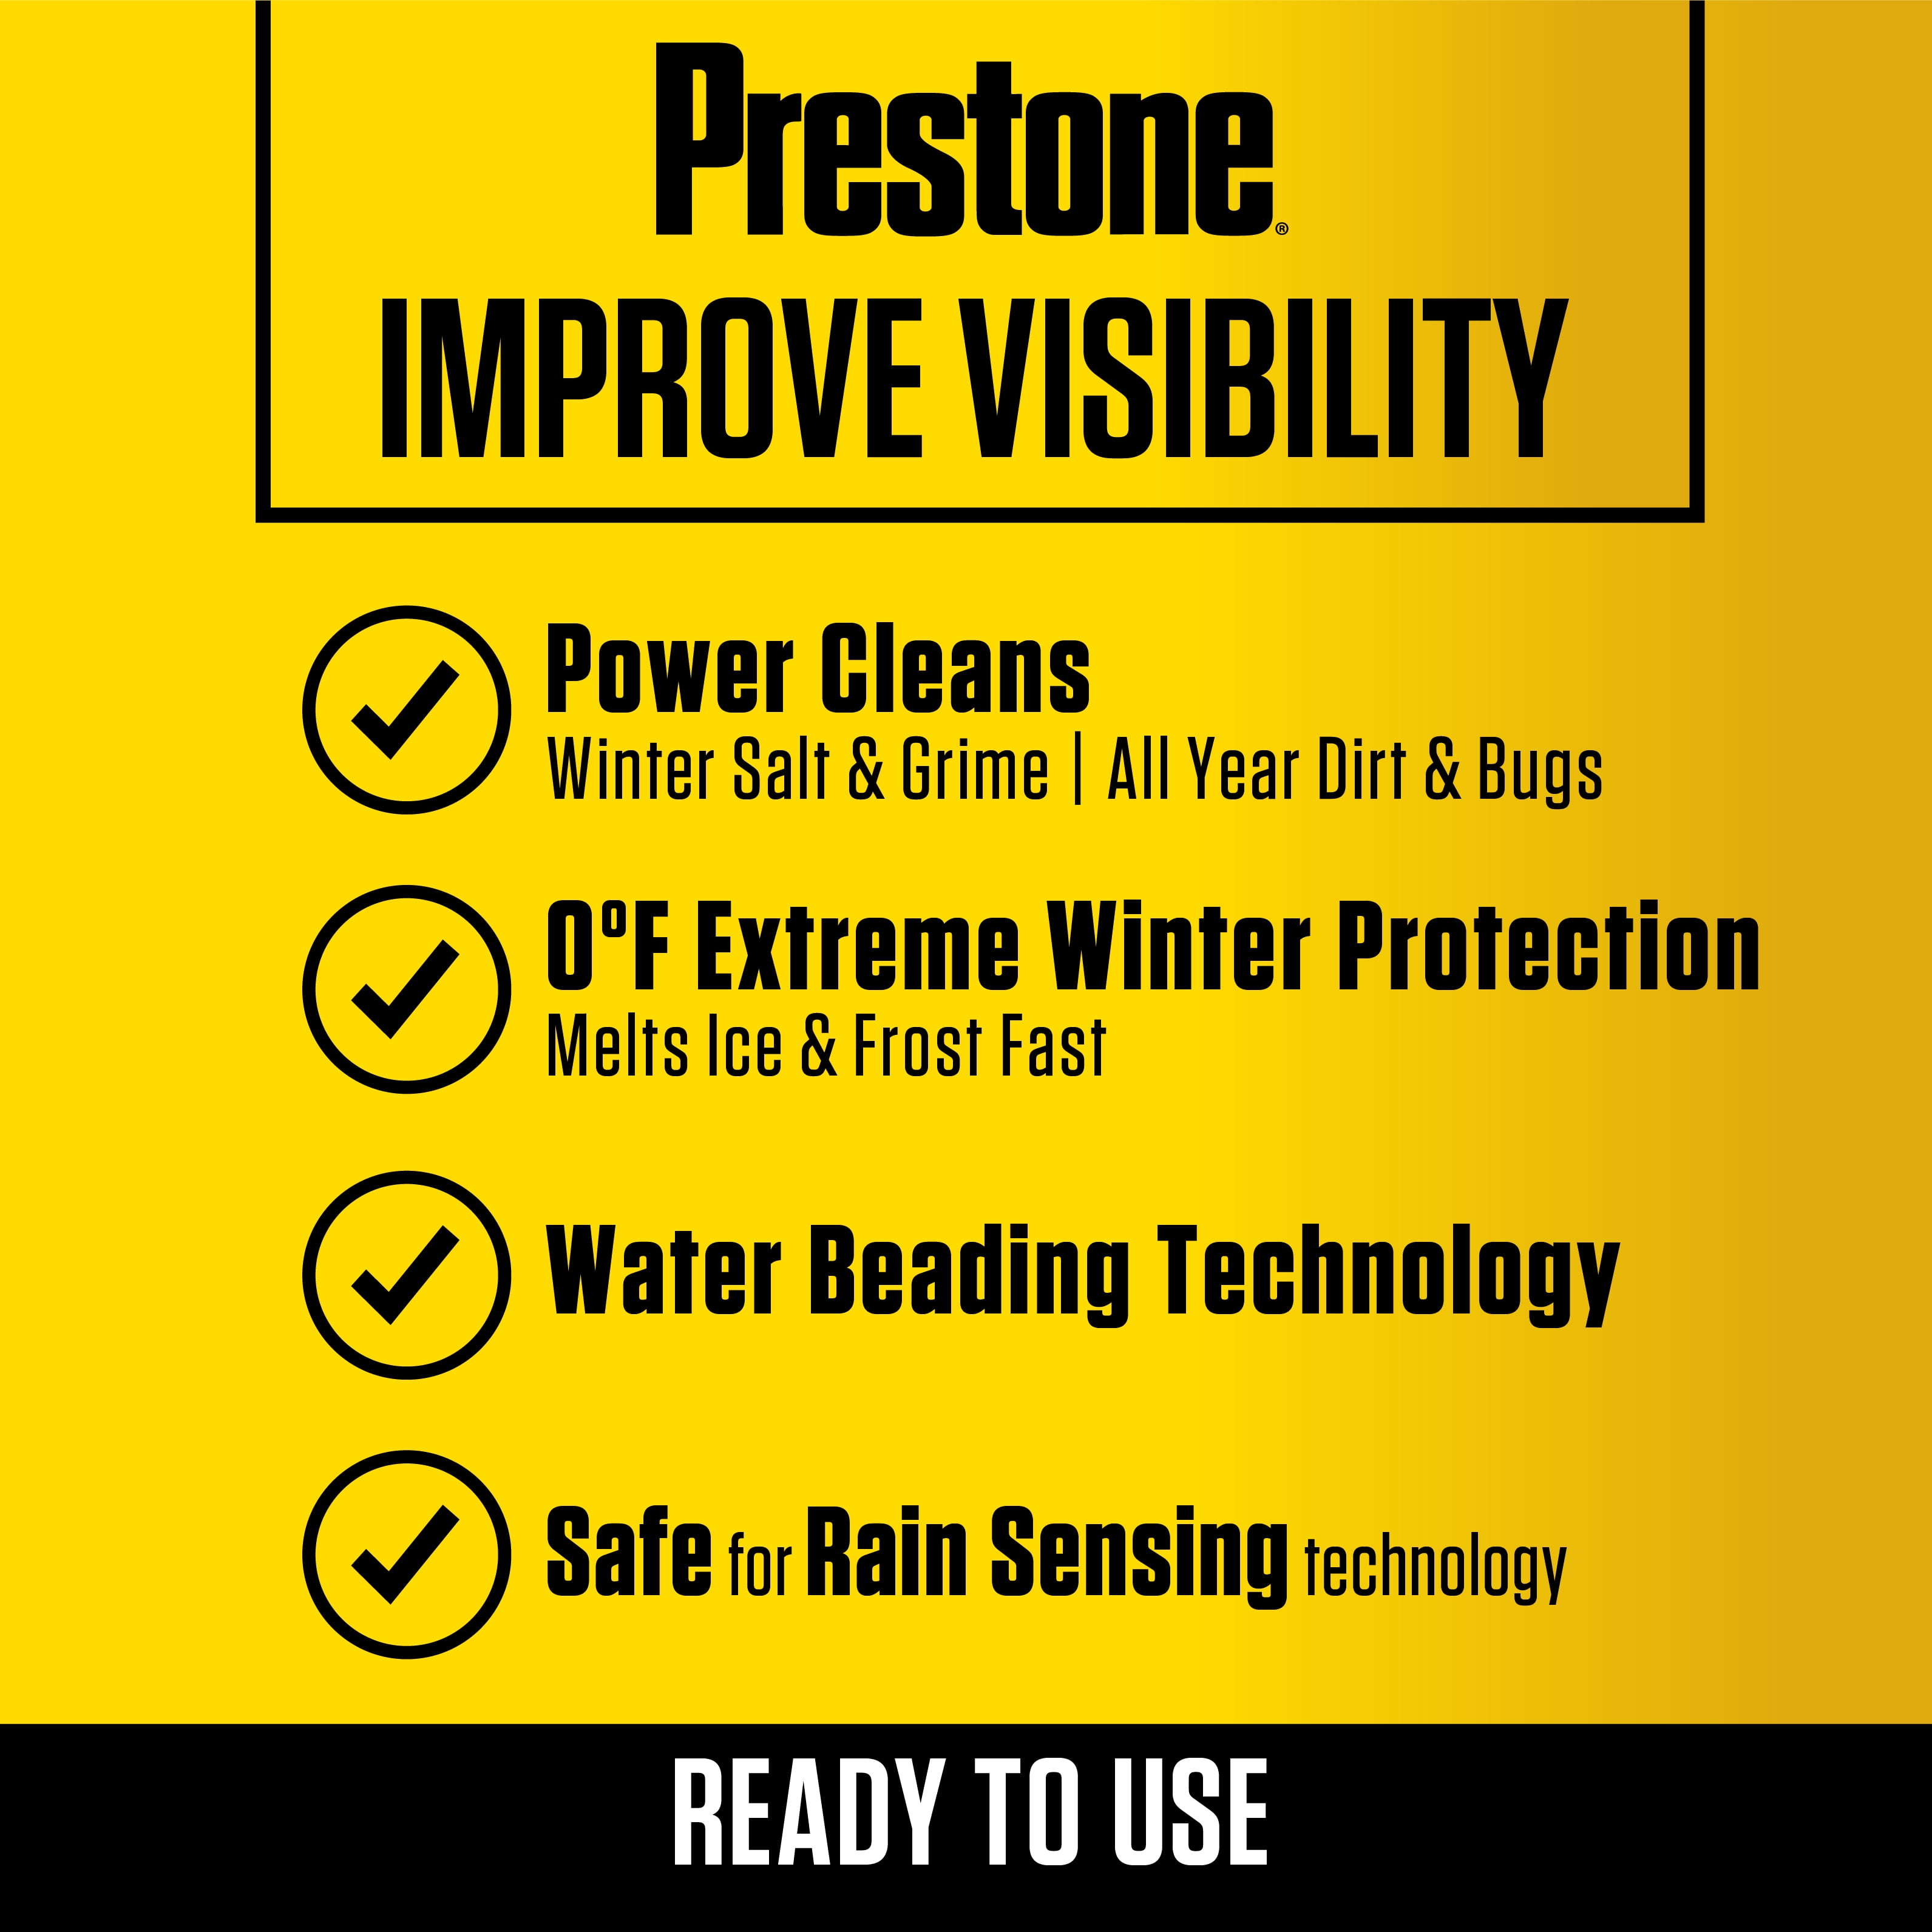 Prestone AS658P All Season 3-in-1 Year Round Windshield Washer Fluid